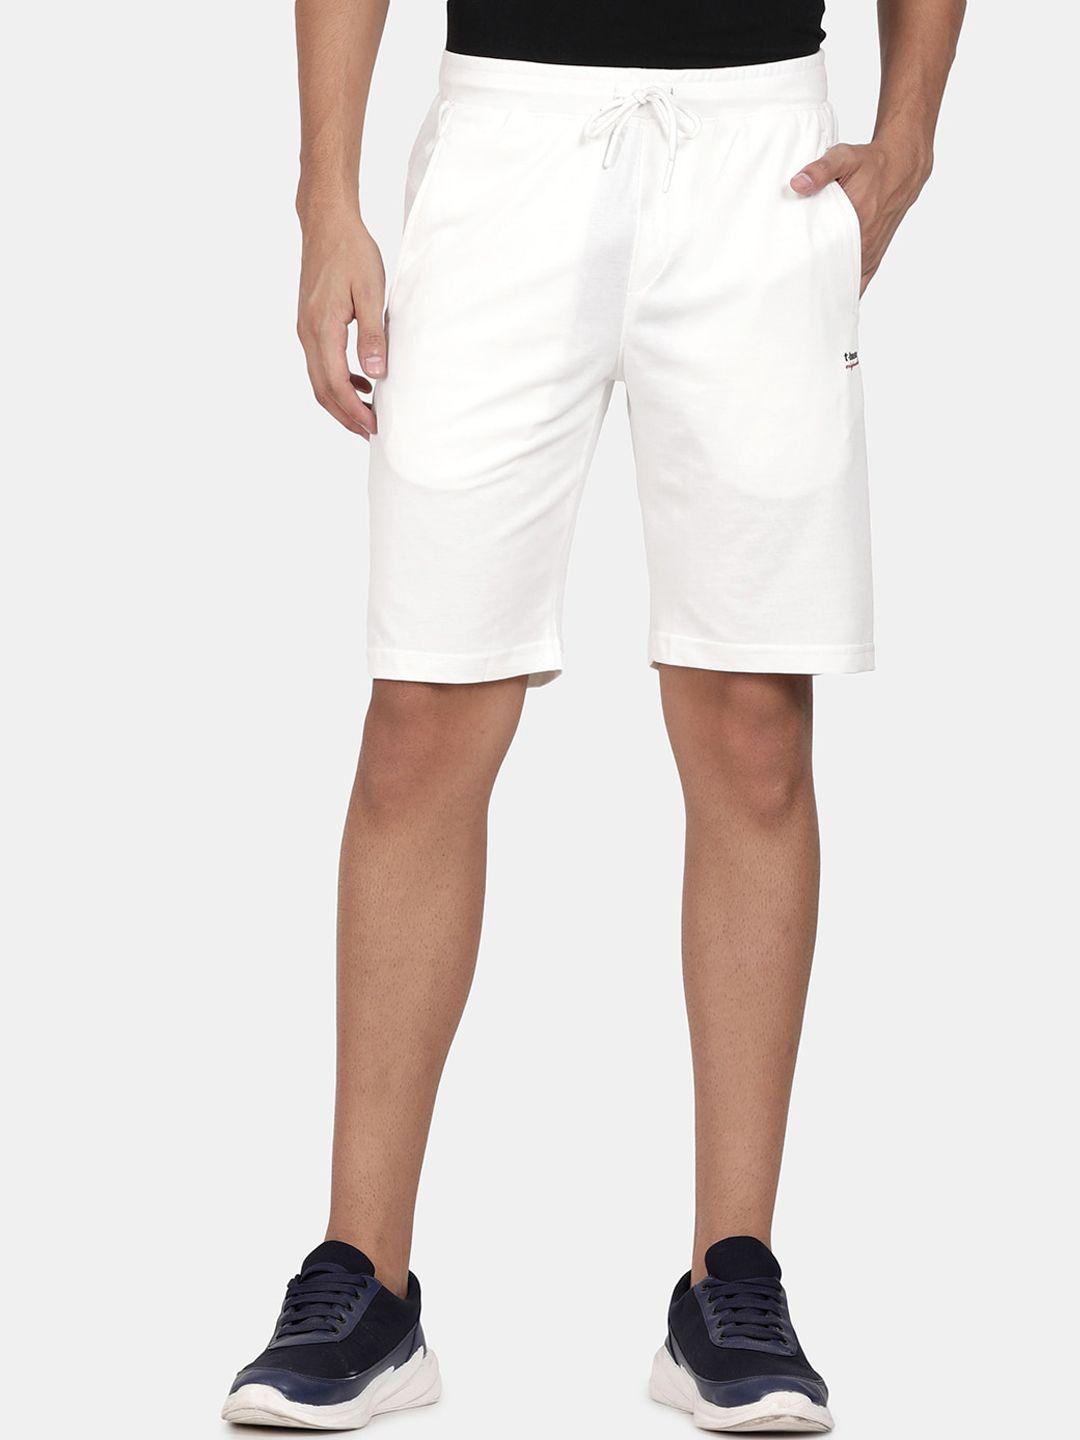 t-base-men-off-white-shorts